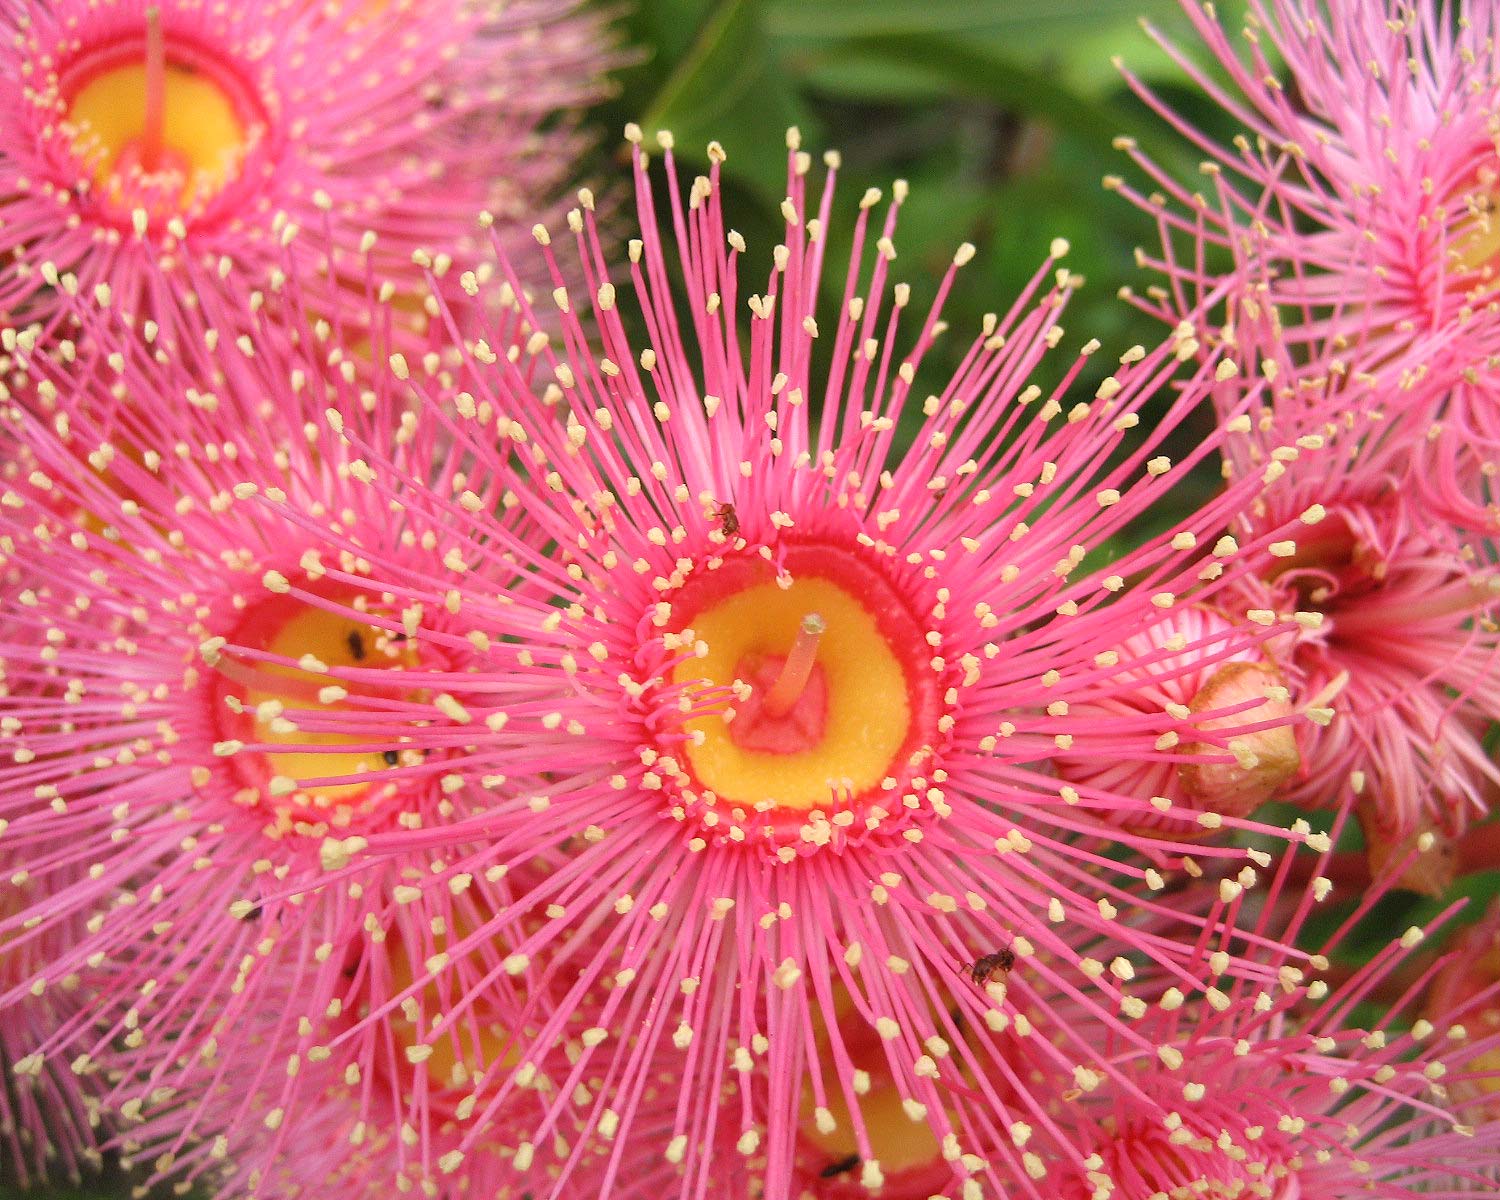 Corymbia cultivars 'Summer Beauty' Pink Flowers